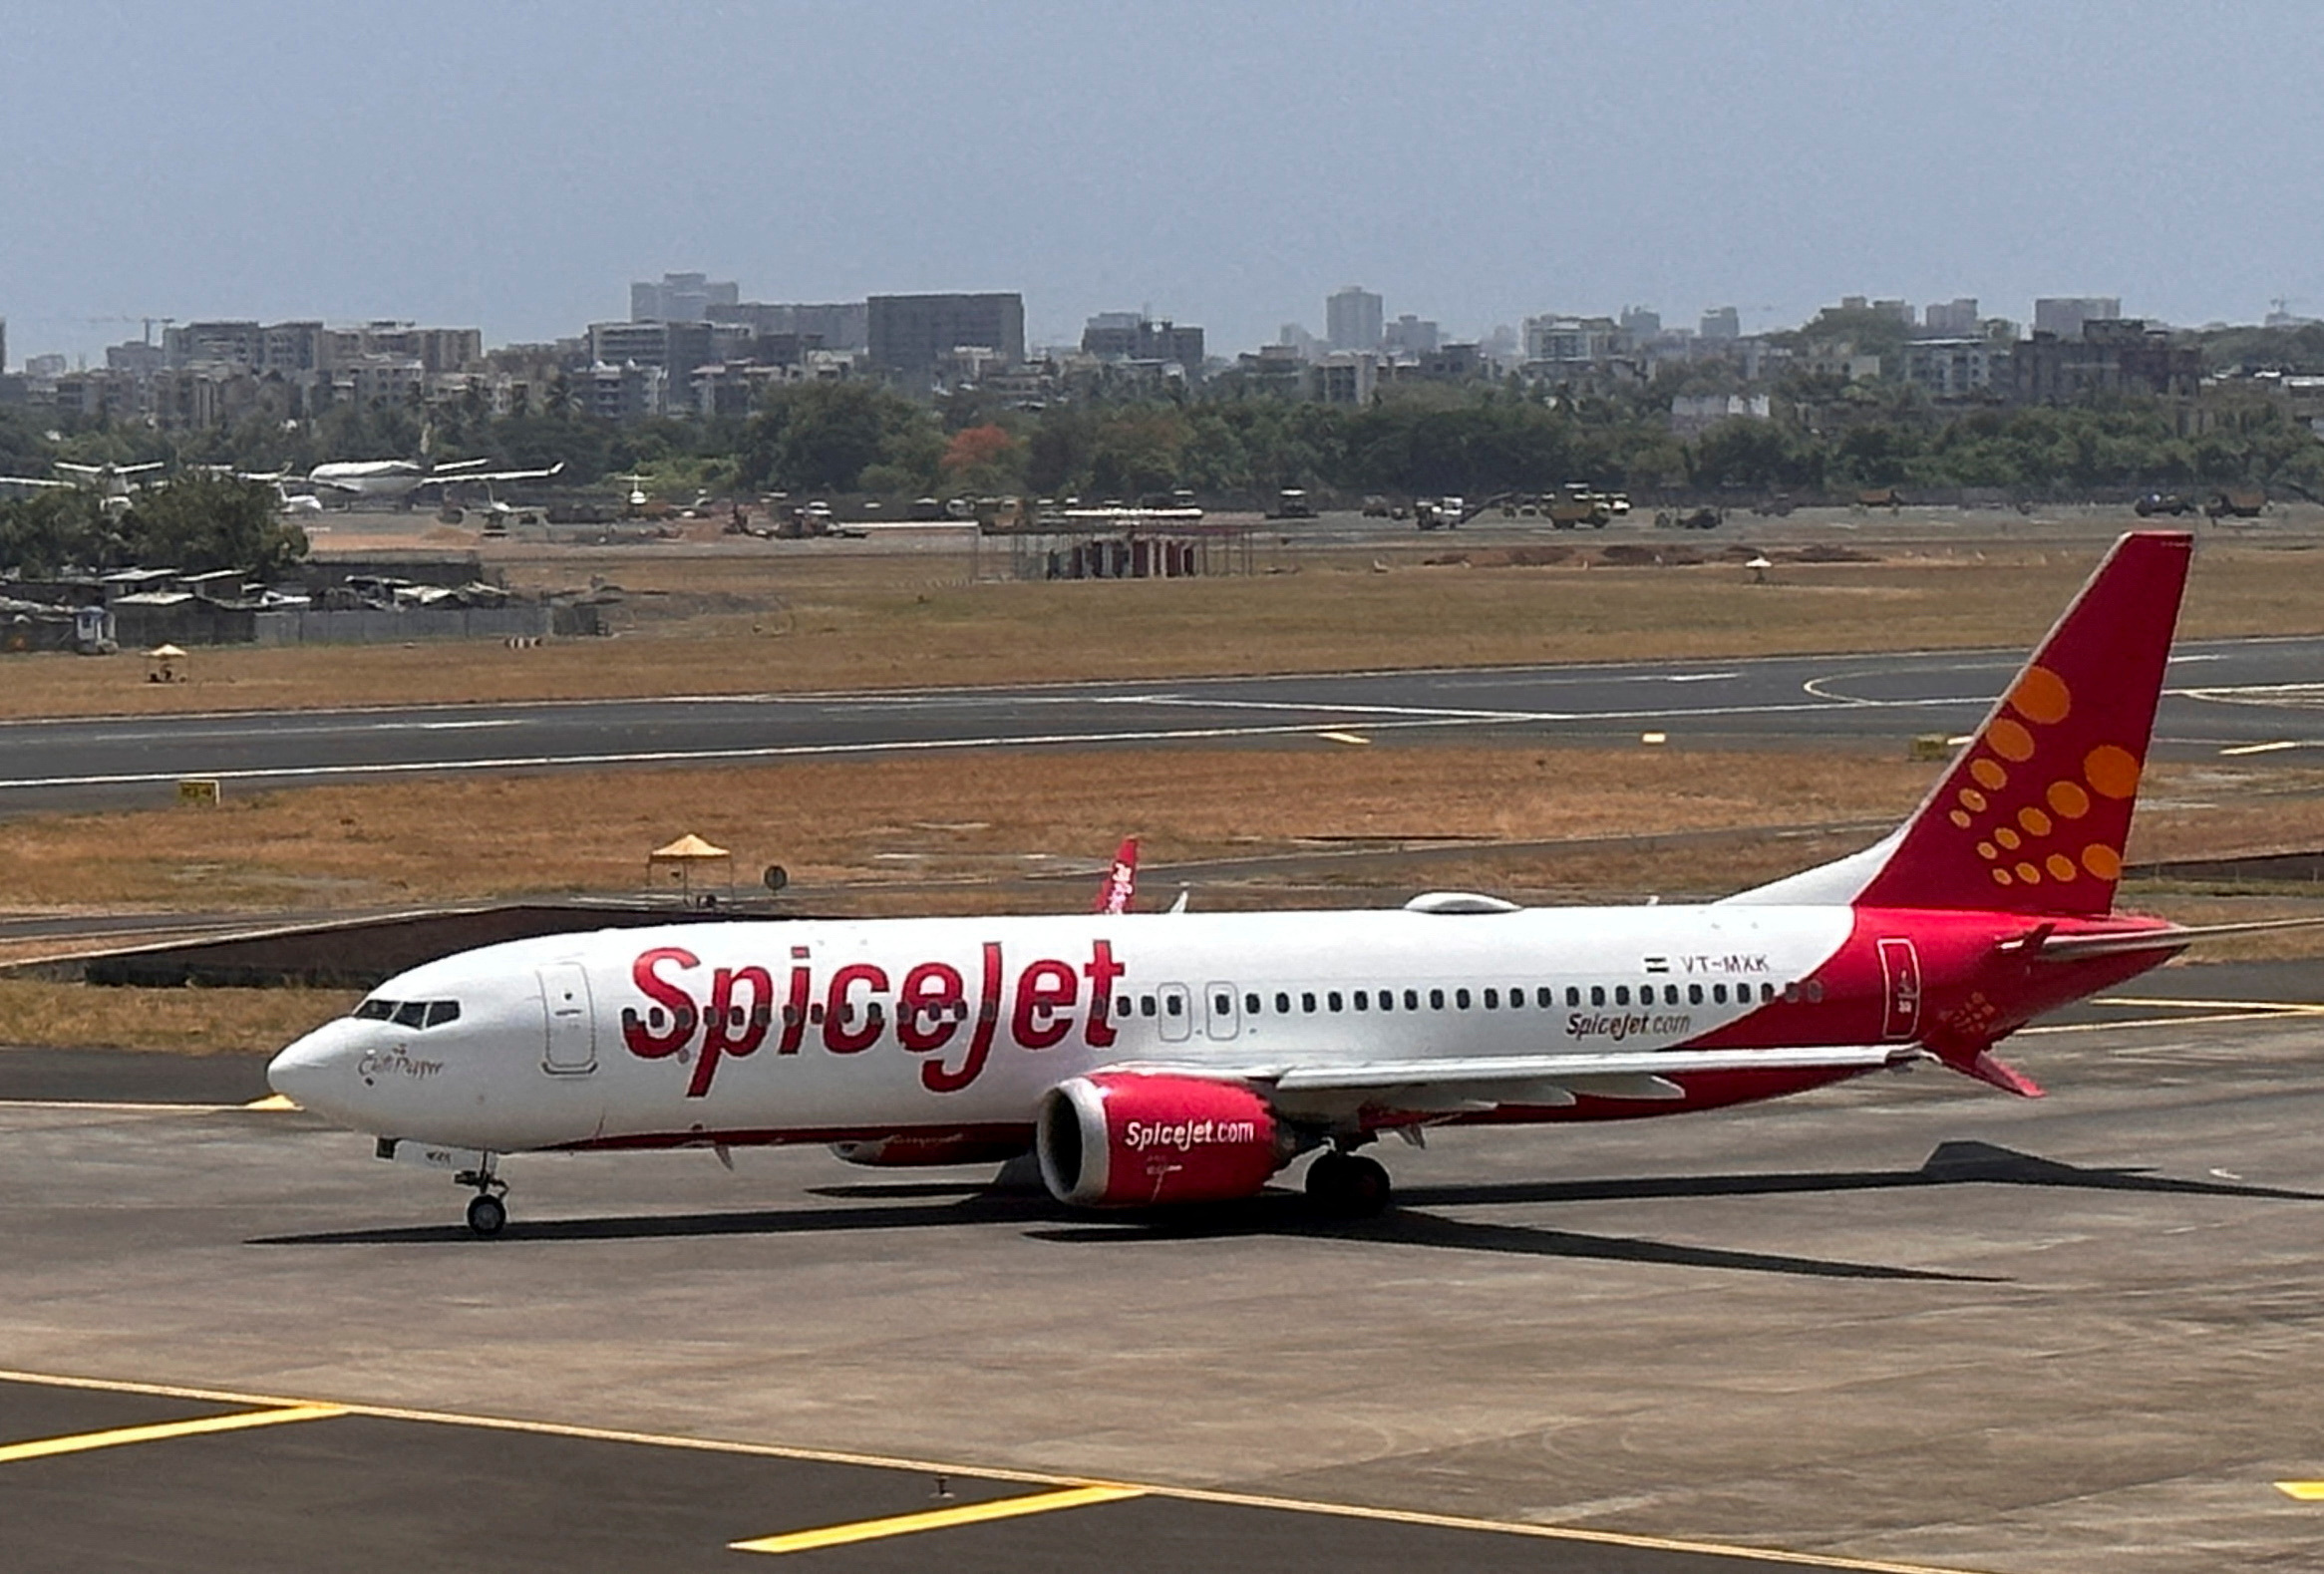 A SpiceJet passenger aircraft taxis on the tarmac at Chhatrapati Shivaji International Airport in Mumbai